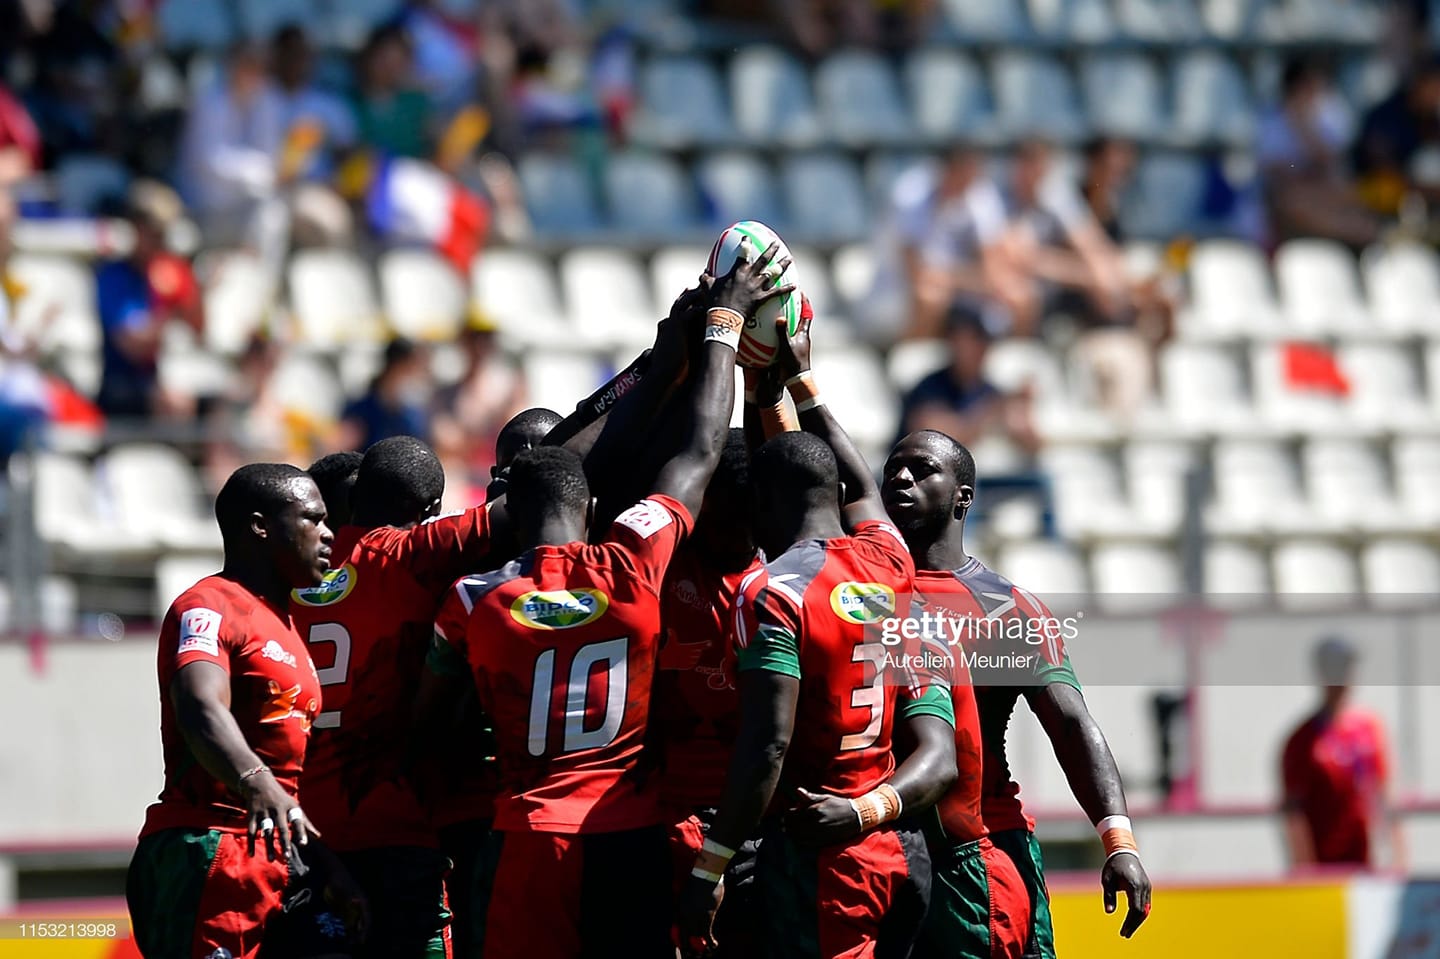 Kenya 7s squad for the 2019-2020 World Sevens series